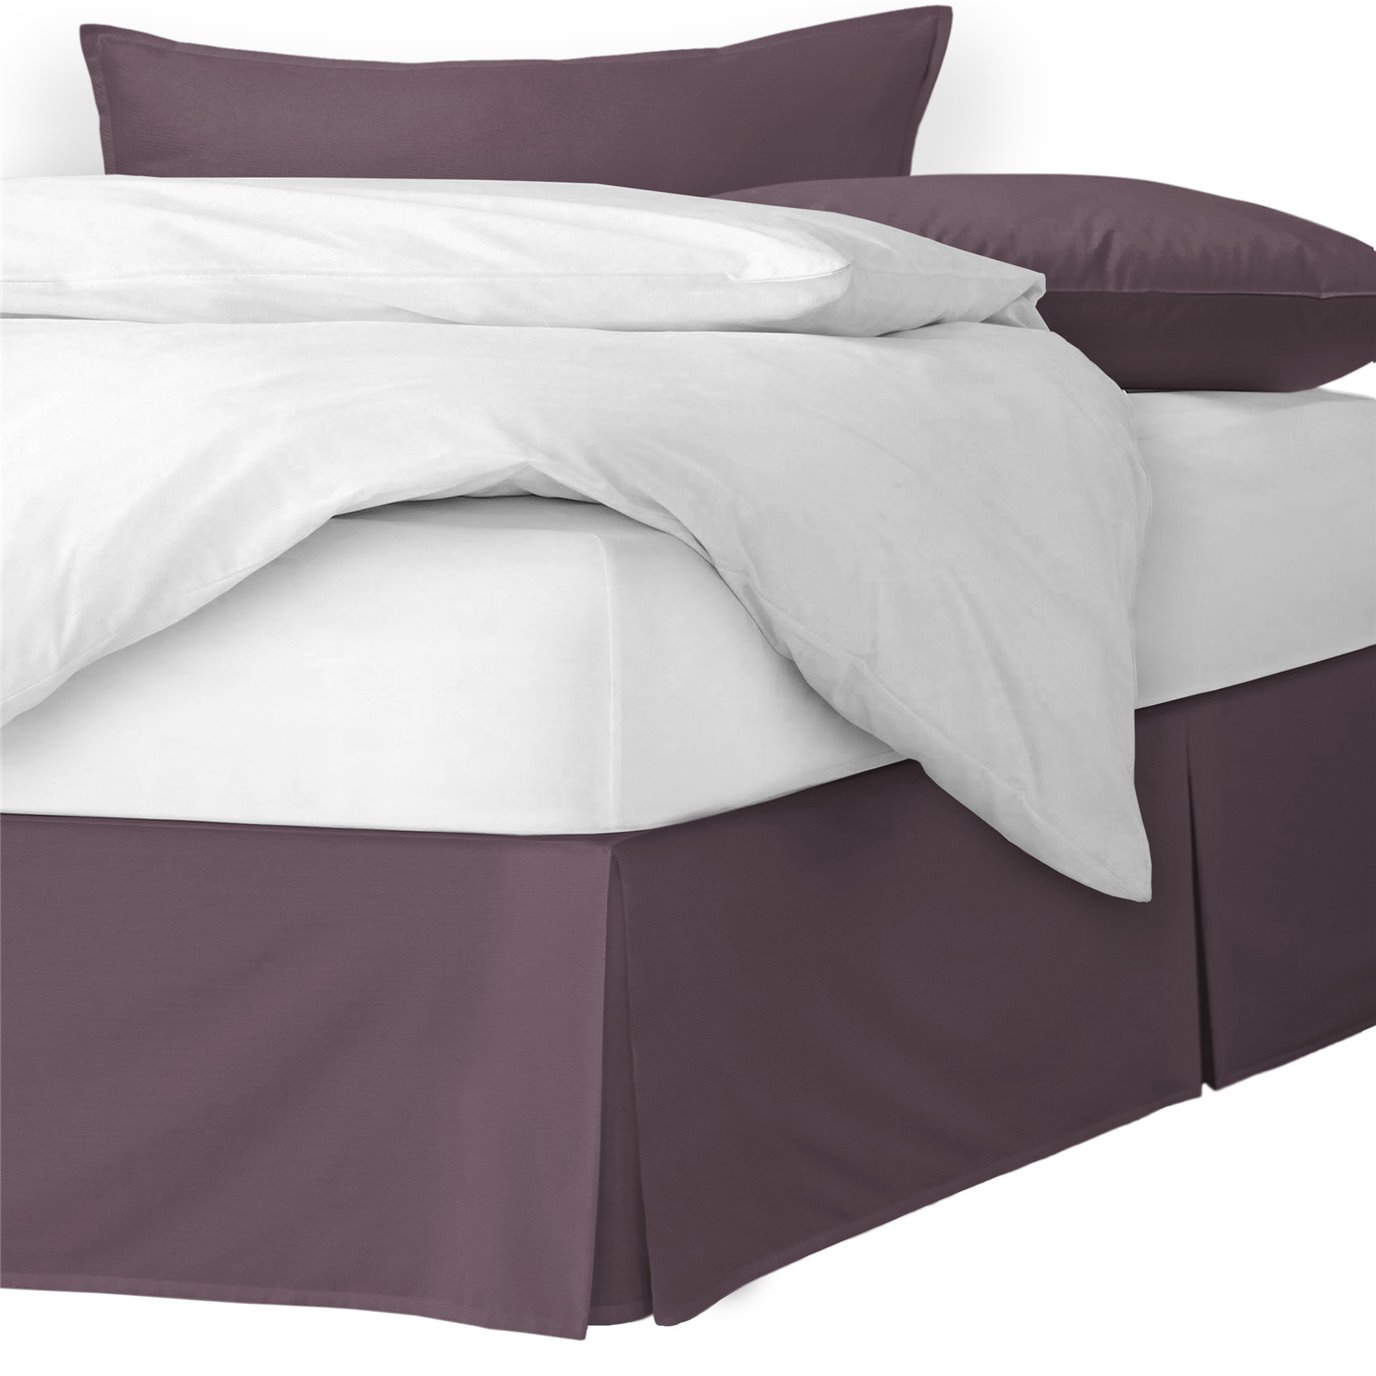 Braxton Purple Grape Platform Bed Skirt - Size King 15" Drop